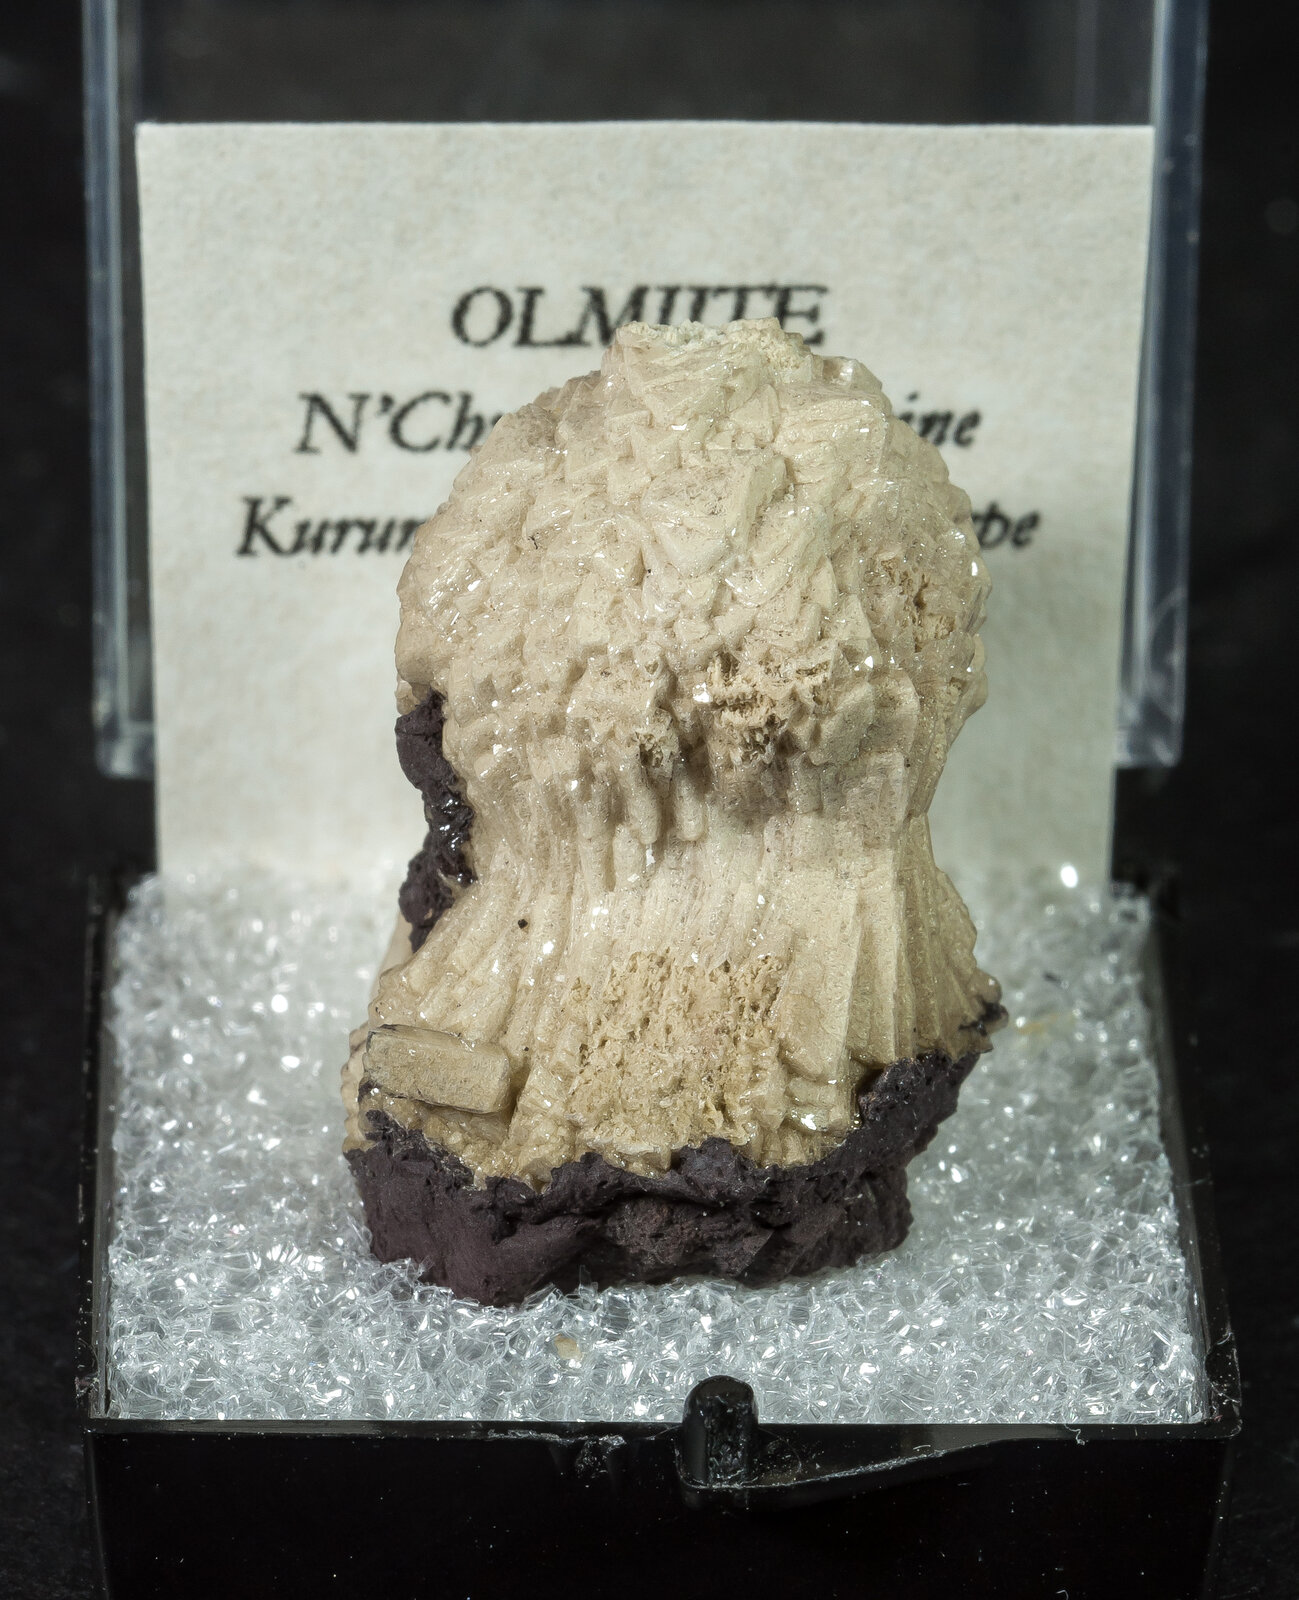 specimens/s_imagesAN9/Olmiite-TLF86AN9f1.jpg